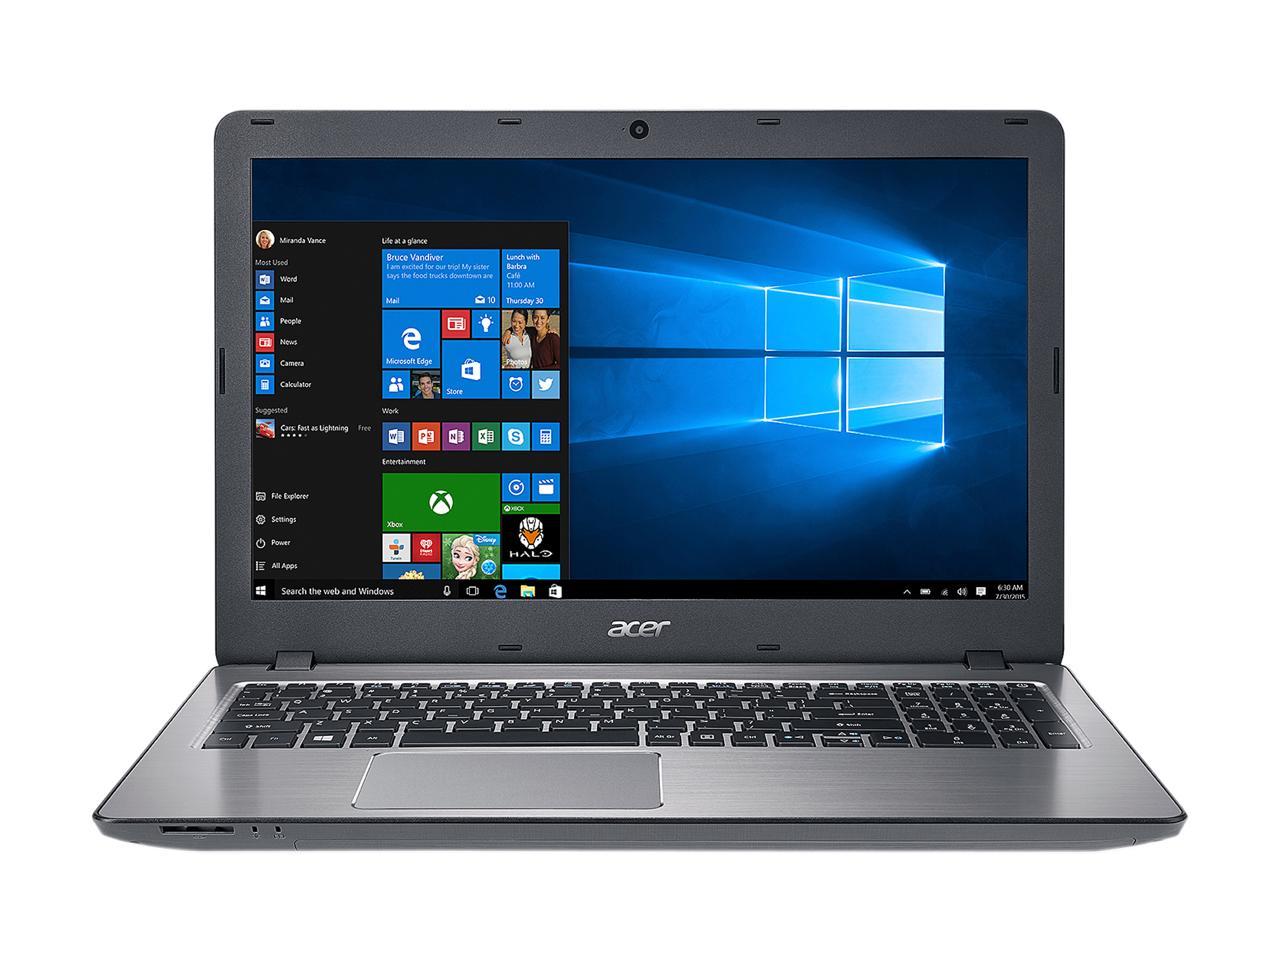 Acer Laptop Aspire F F5 573g 74mv Intel Core I7 7th Gen 7500u 2 70 Ghz 8 Gb Ddr4 Memory 256 Gb Ssd Nvidia Geforce 940mx 15 6 Windows 10 Home 64 Bit Newegg Com